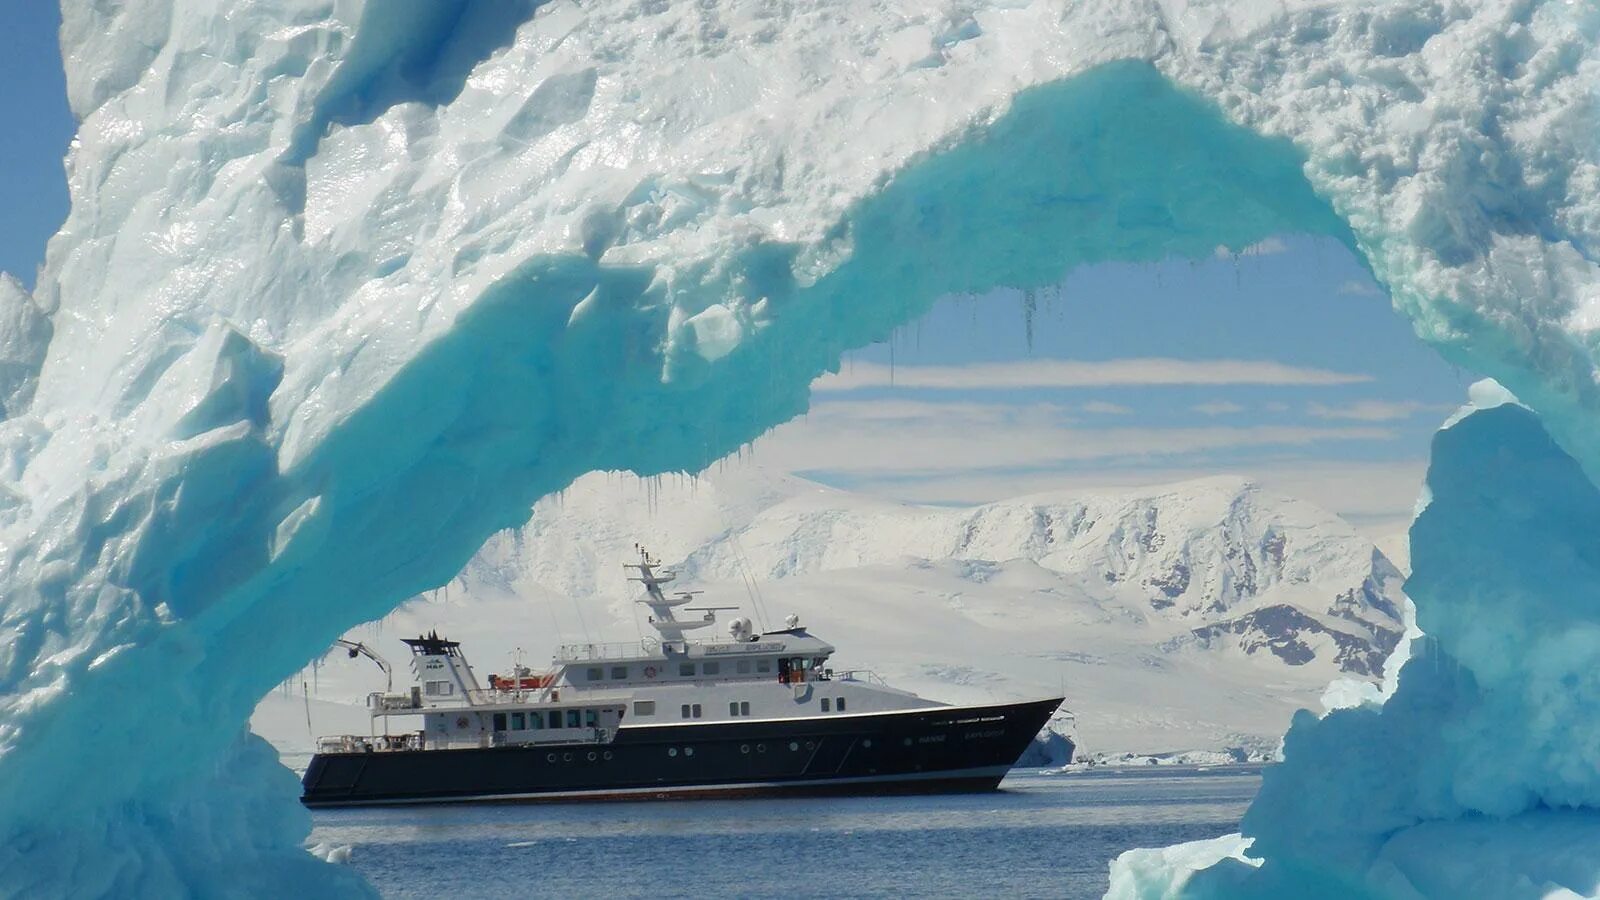 Антарктида путешествие цена. Затонувшая яхта в Антарктиде. Яхта во льдах. Парусная яхта в Антарктиде. Путешествие в Антарктиду.